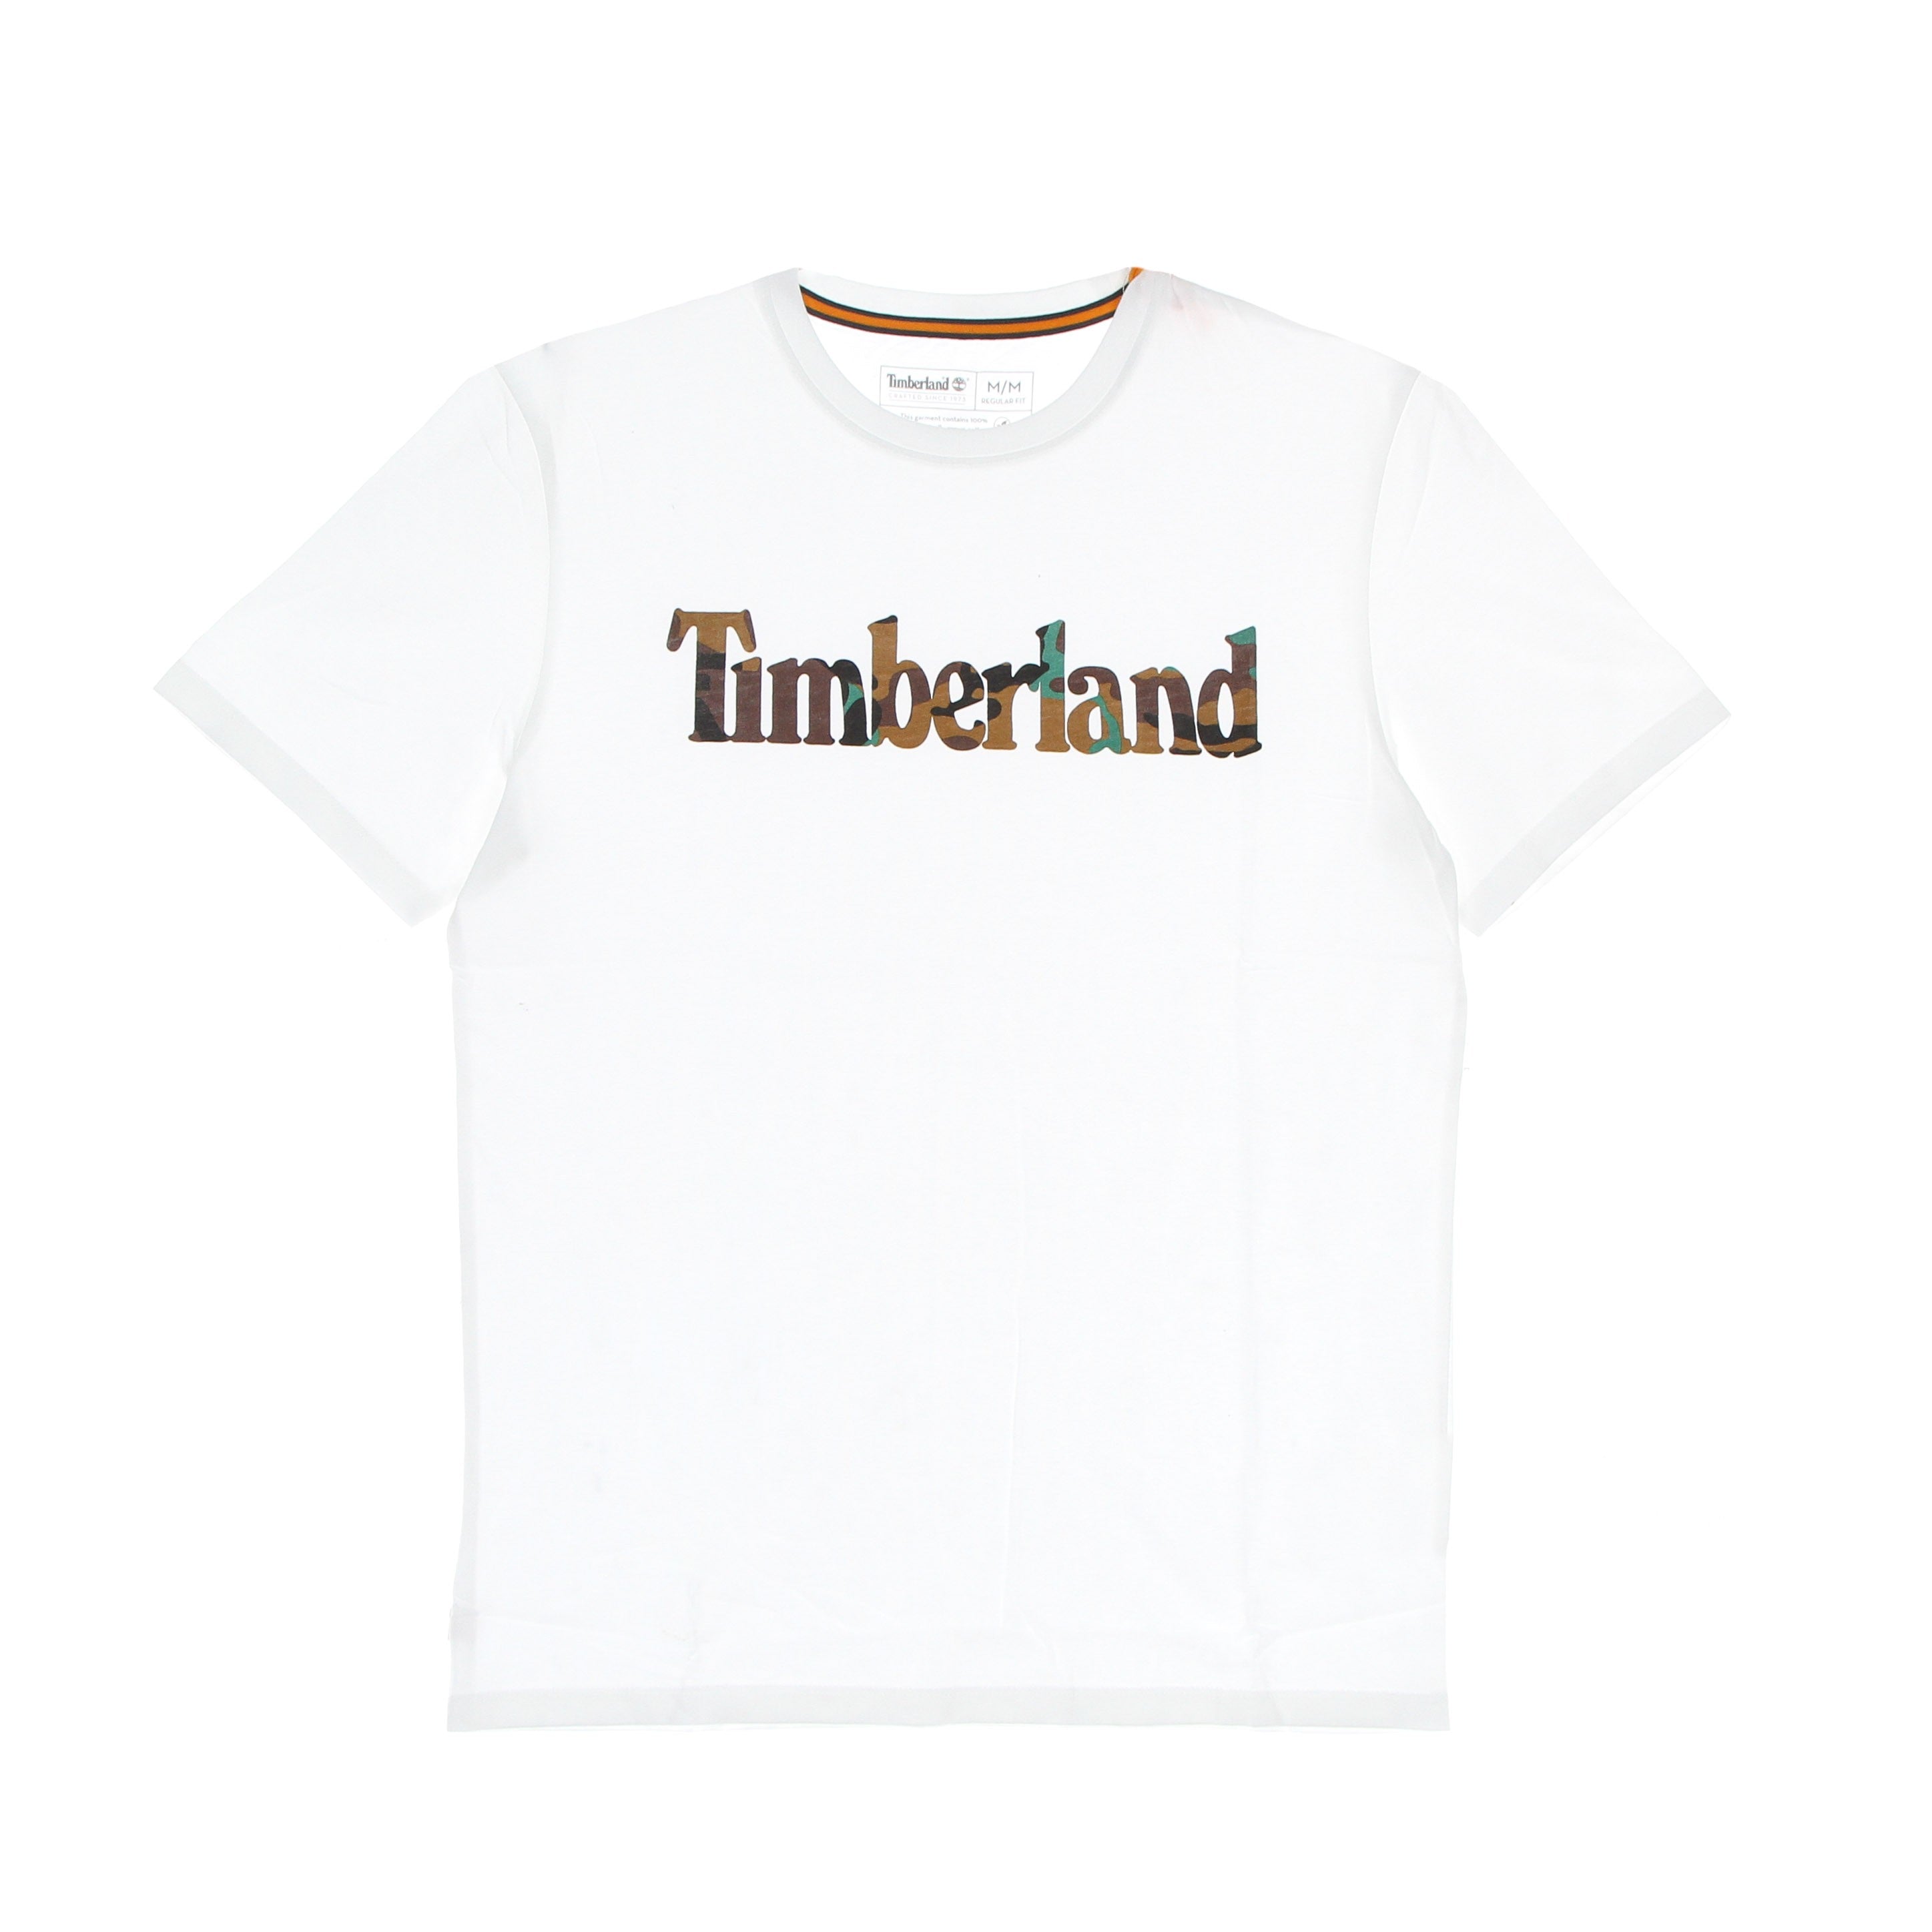 Timberland, Maglietta Uomo Camo Linear Tee, White